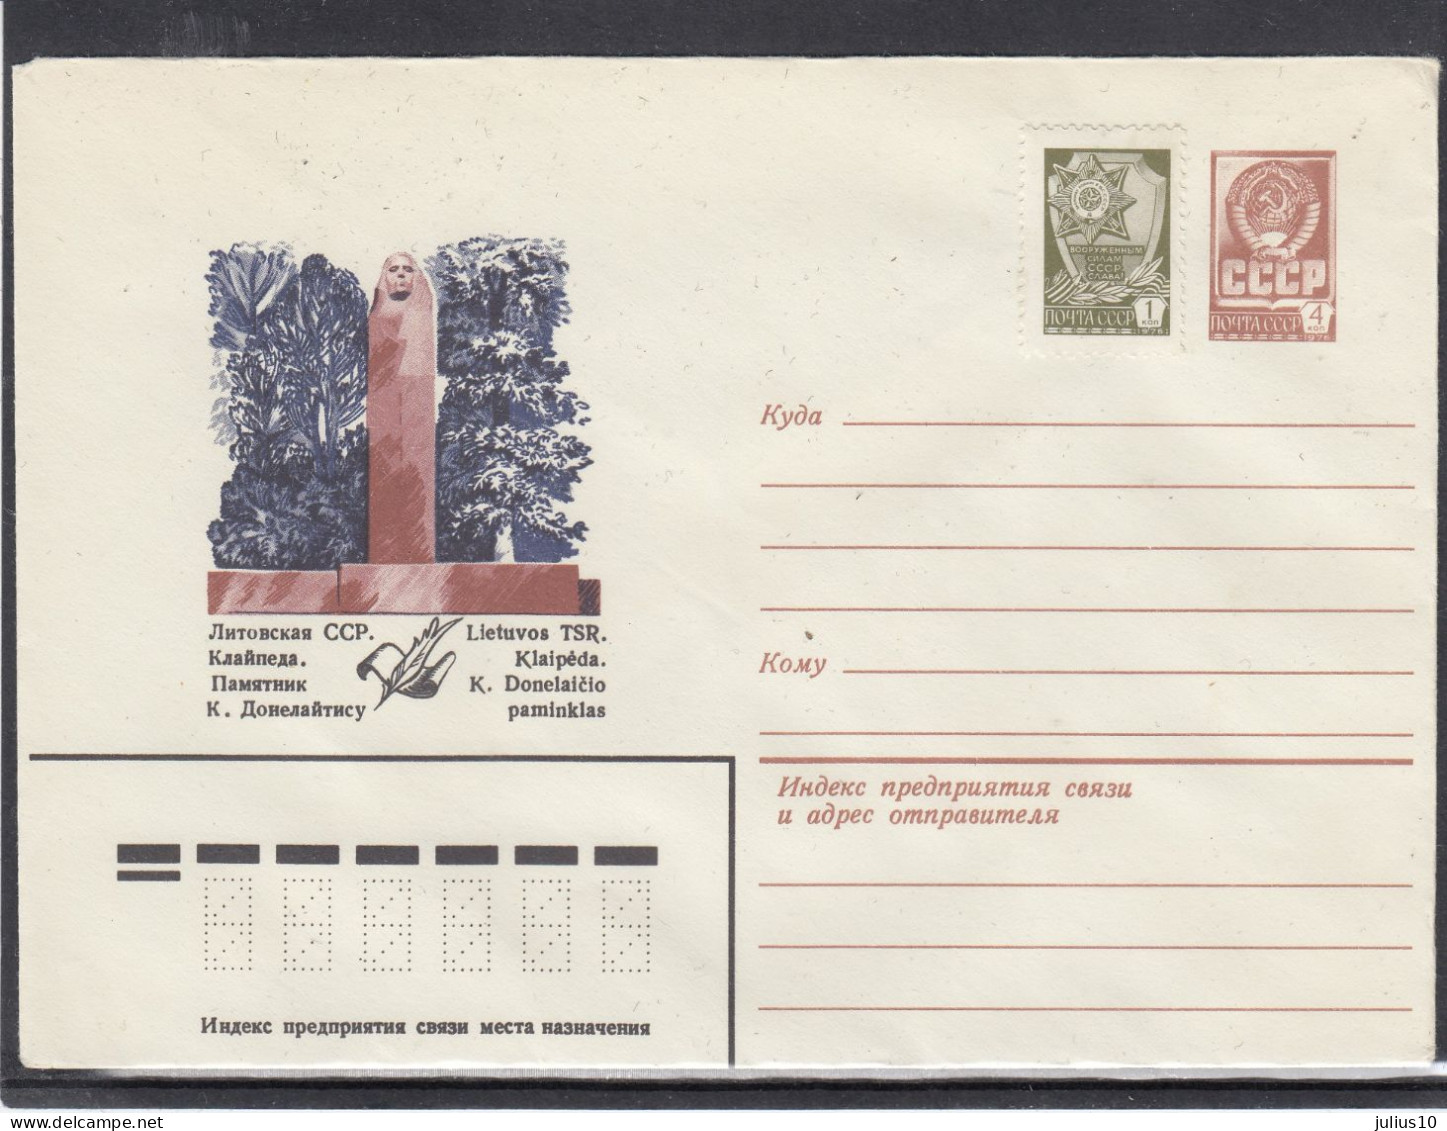 LITHUANIA (USSR) 1982 Cover Klaipeda Poet K.Donelaitis Monument #LTV131 - Lituania